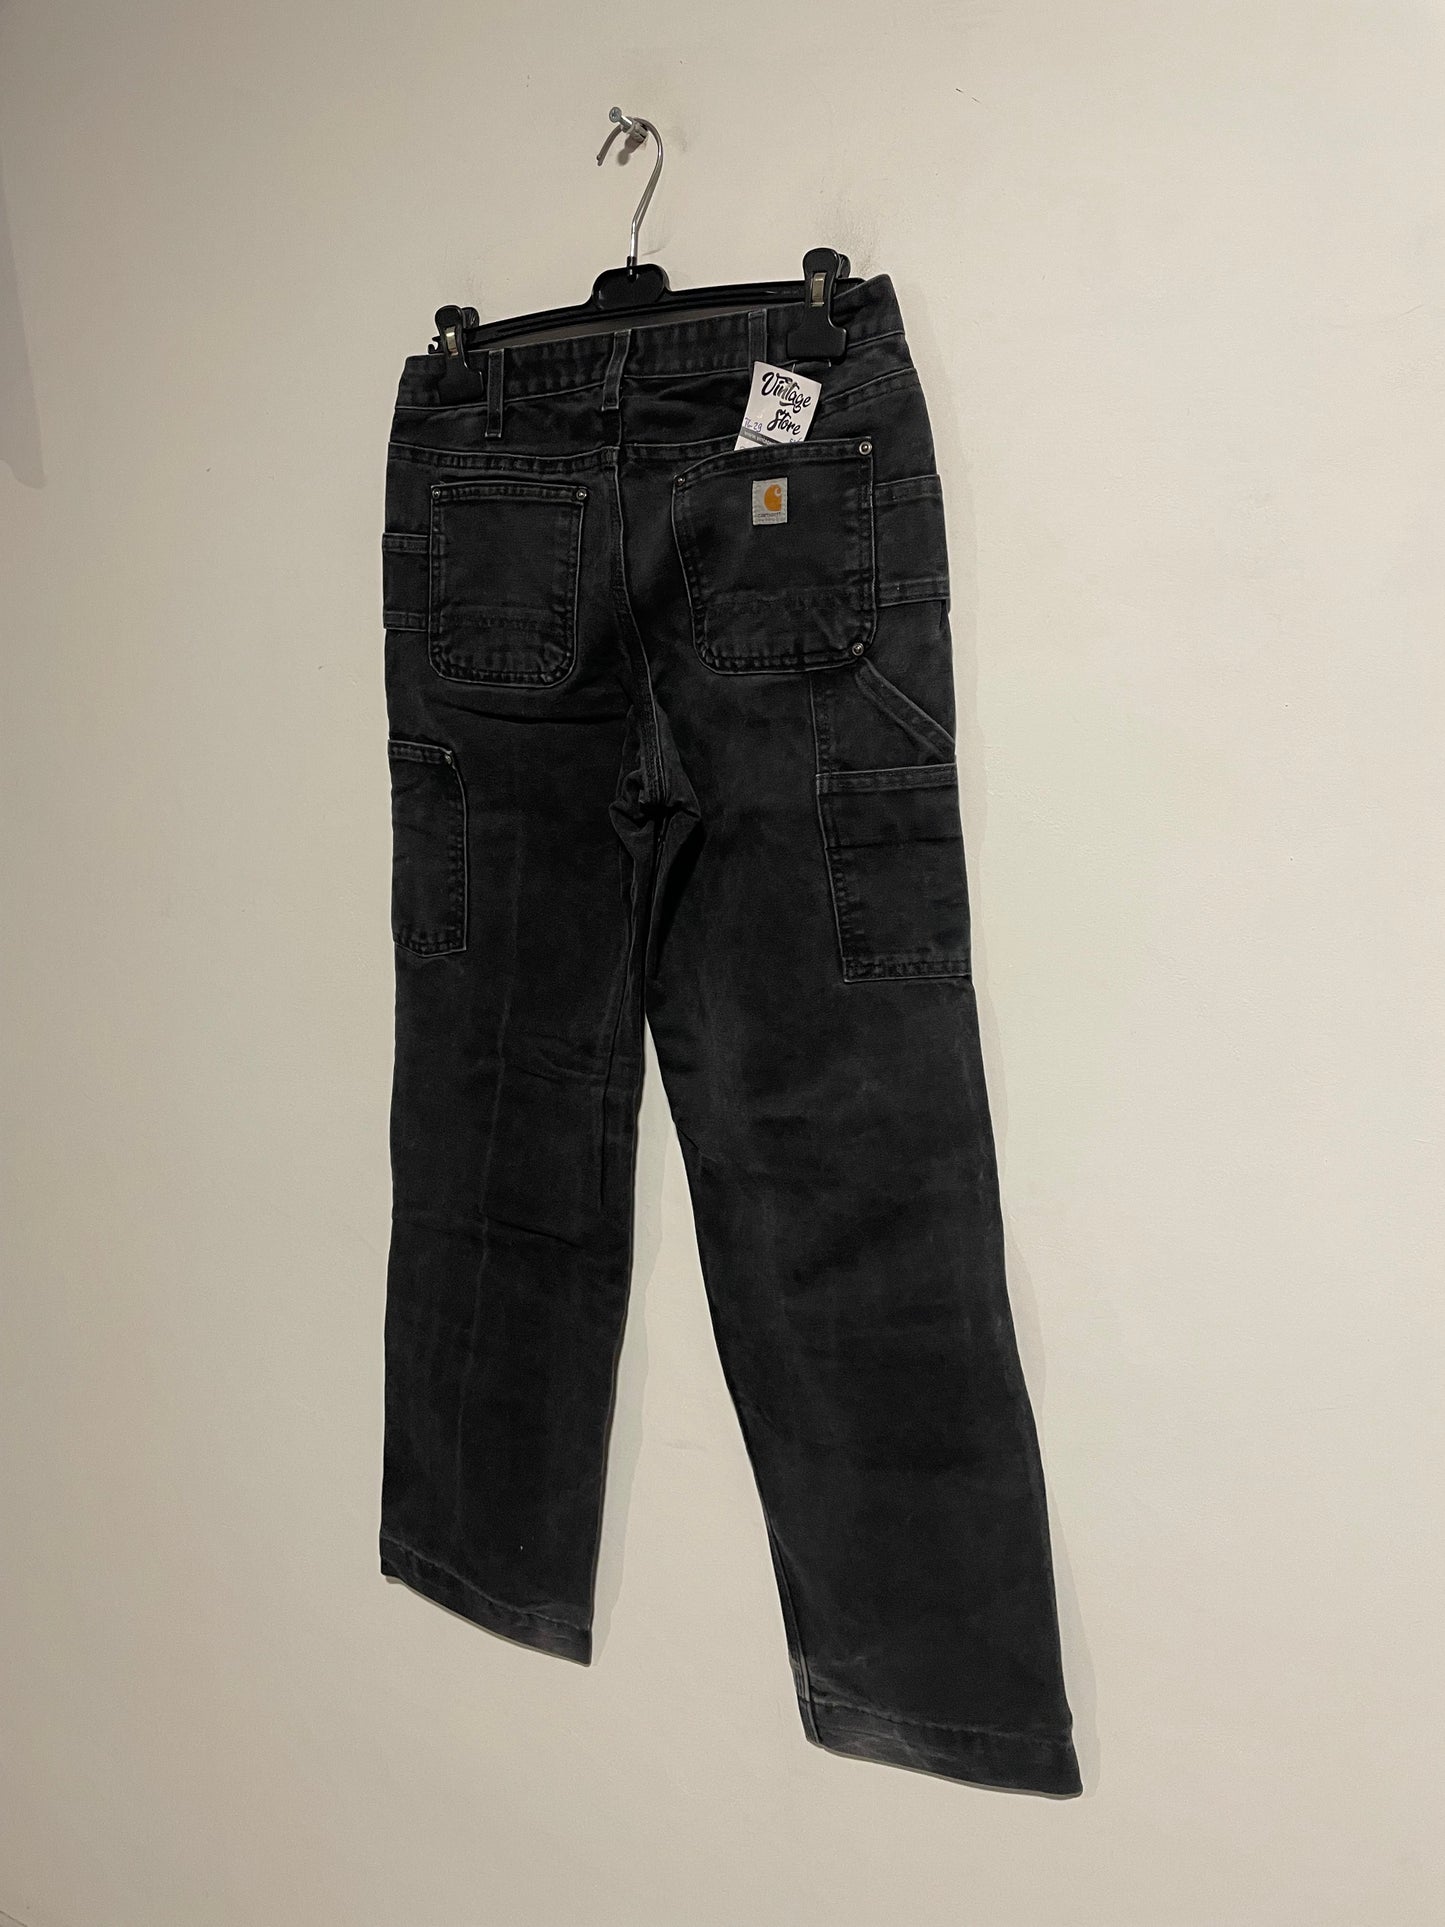 Jeans Carhartt double knee black (C701)